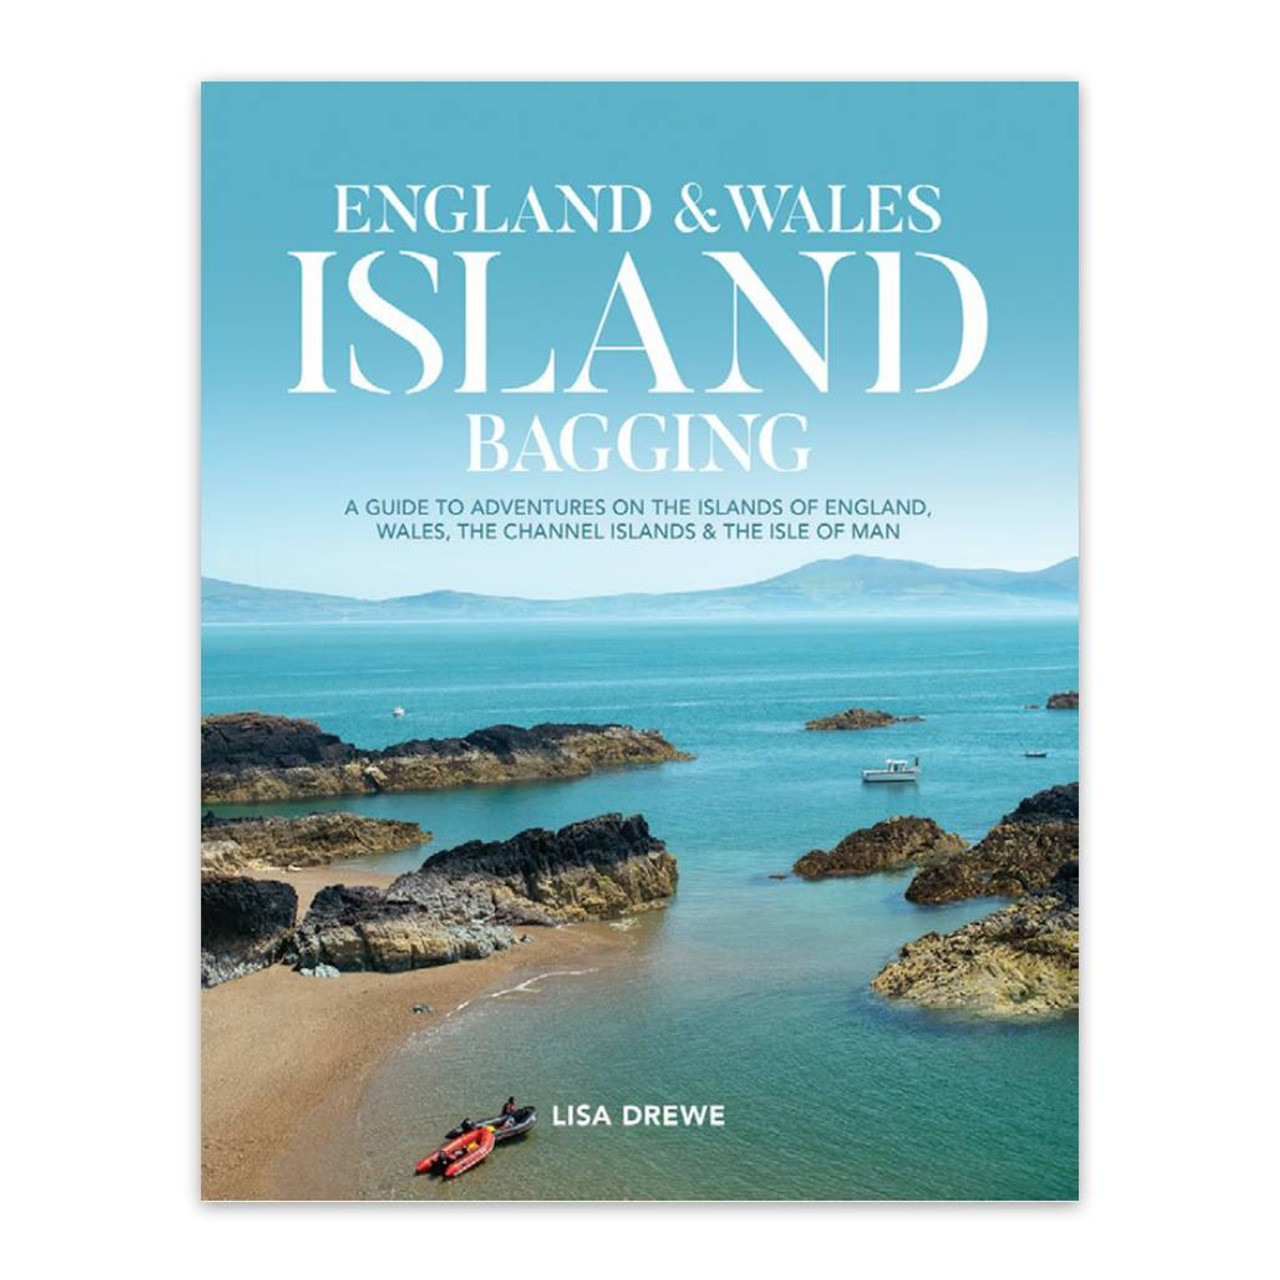 EnglandandWales Island Bagging